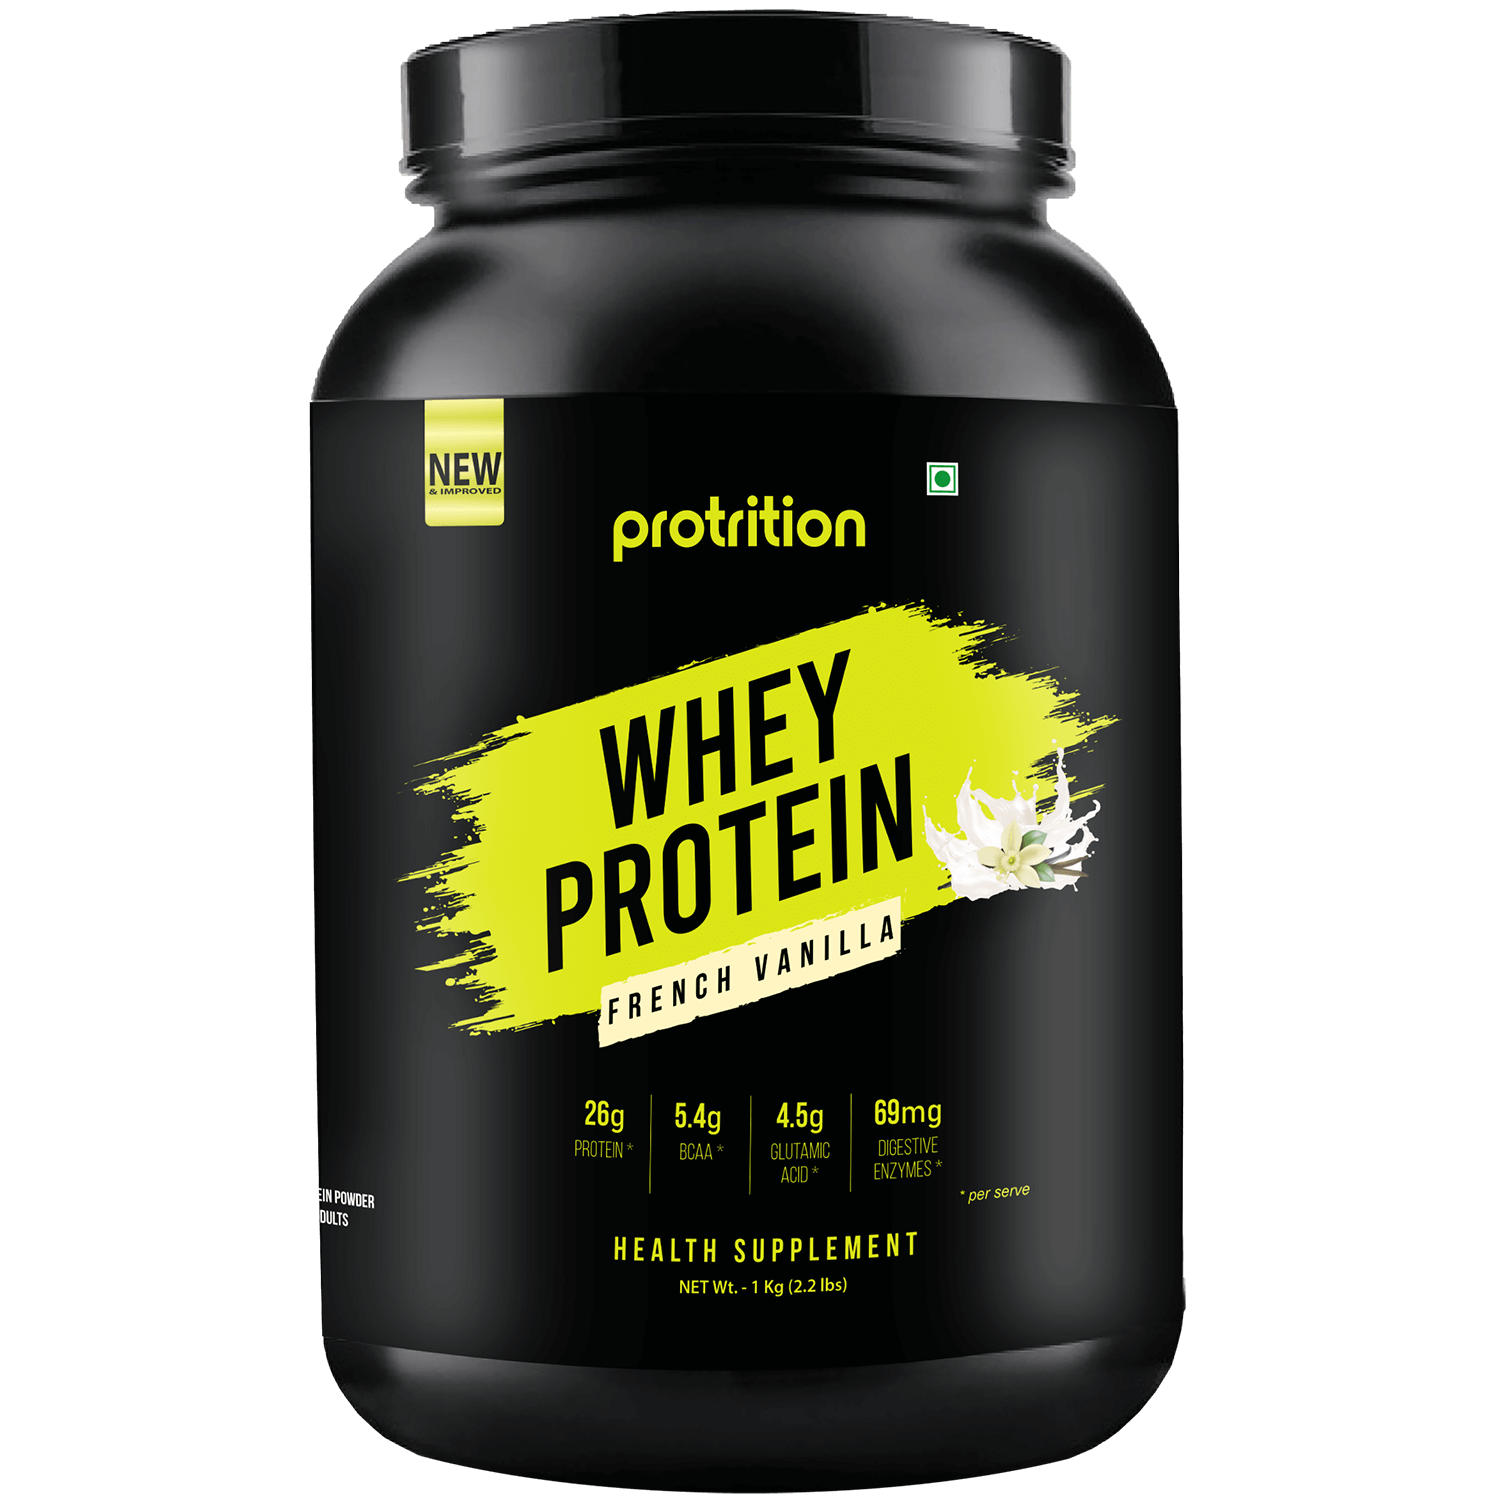 Protrition Whey Protein, 1Kg, French Vanilla